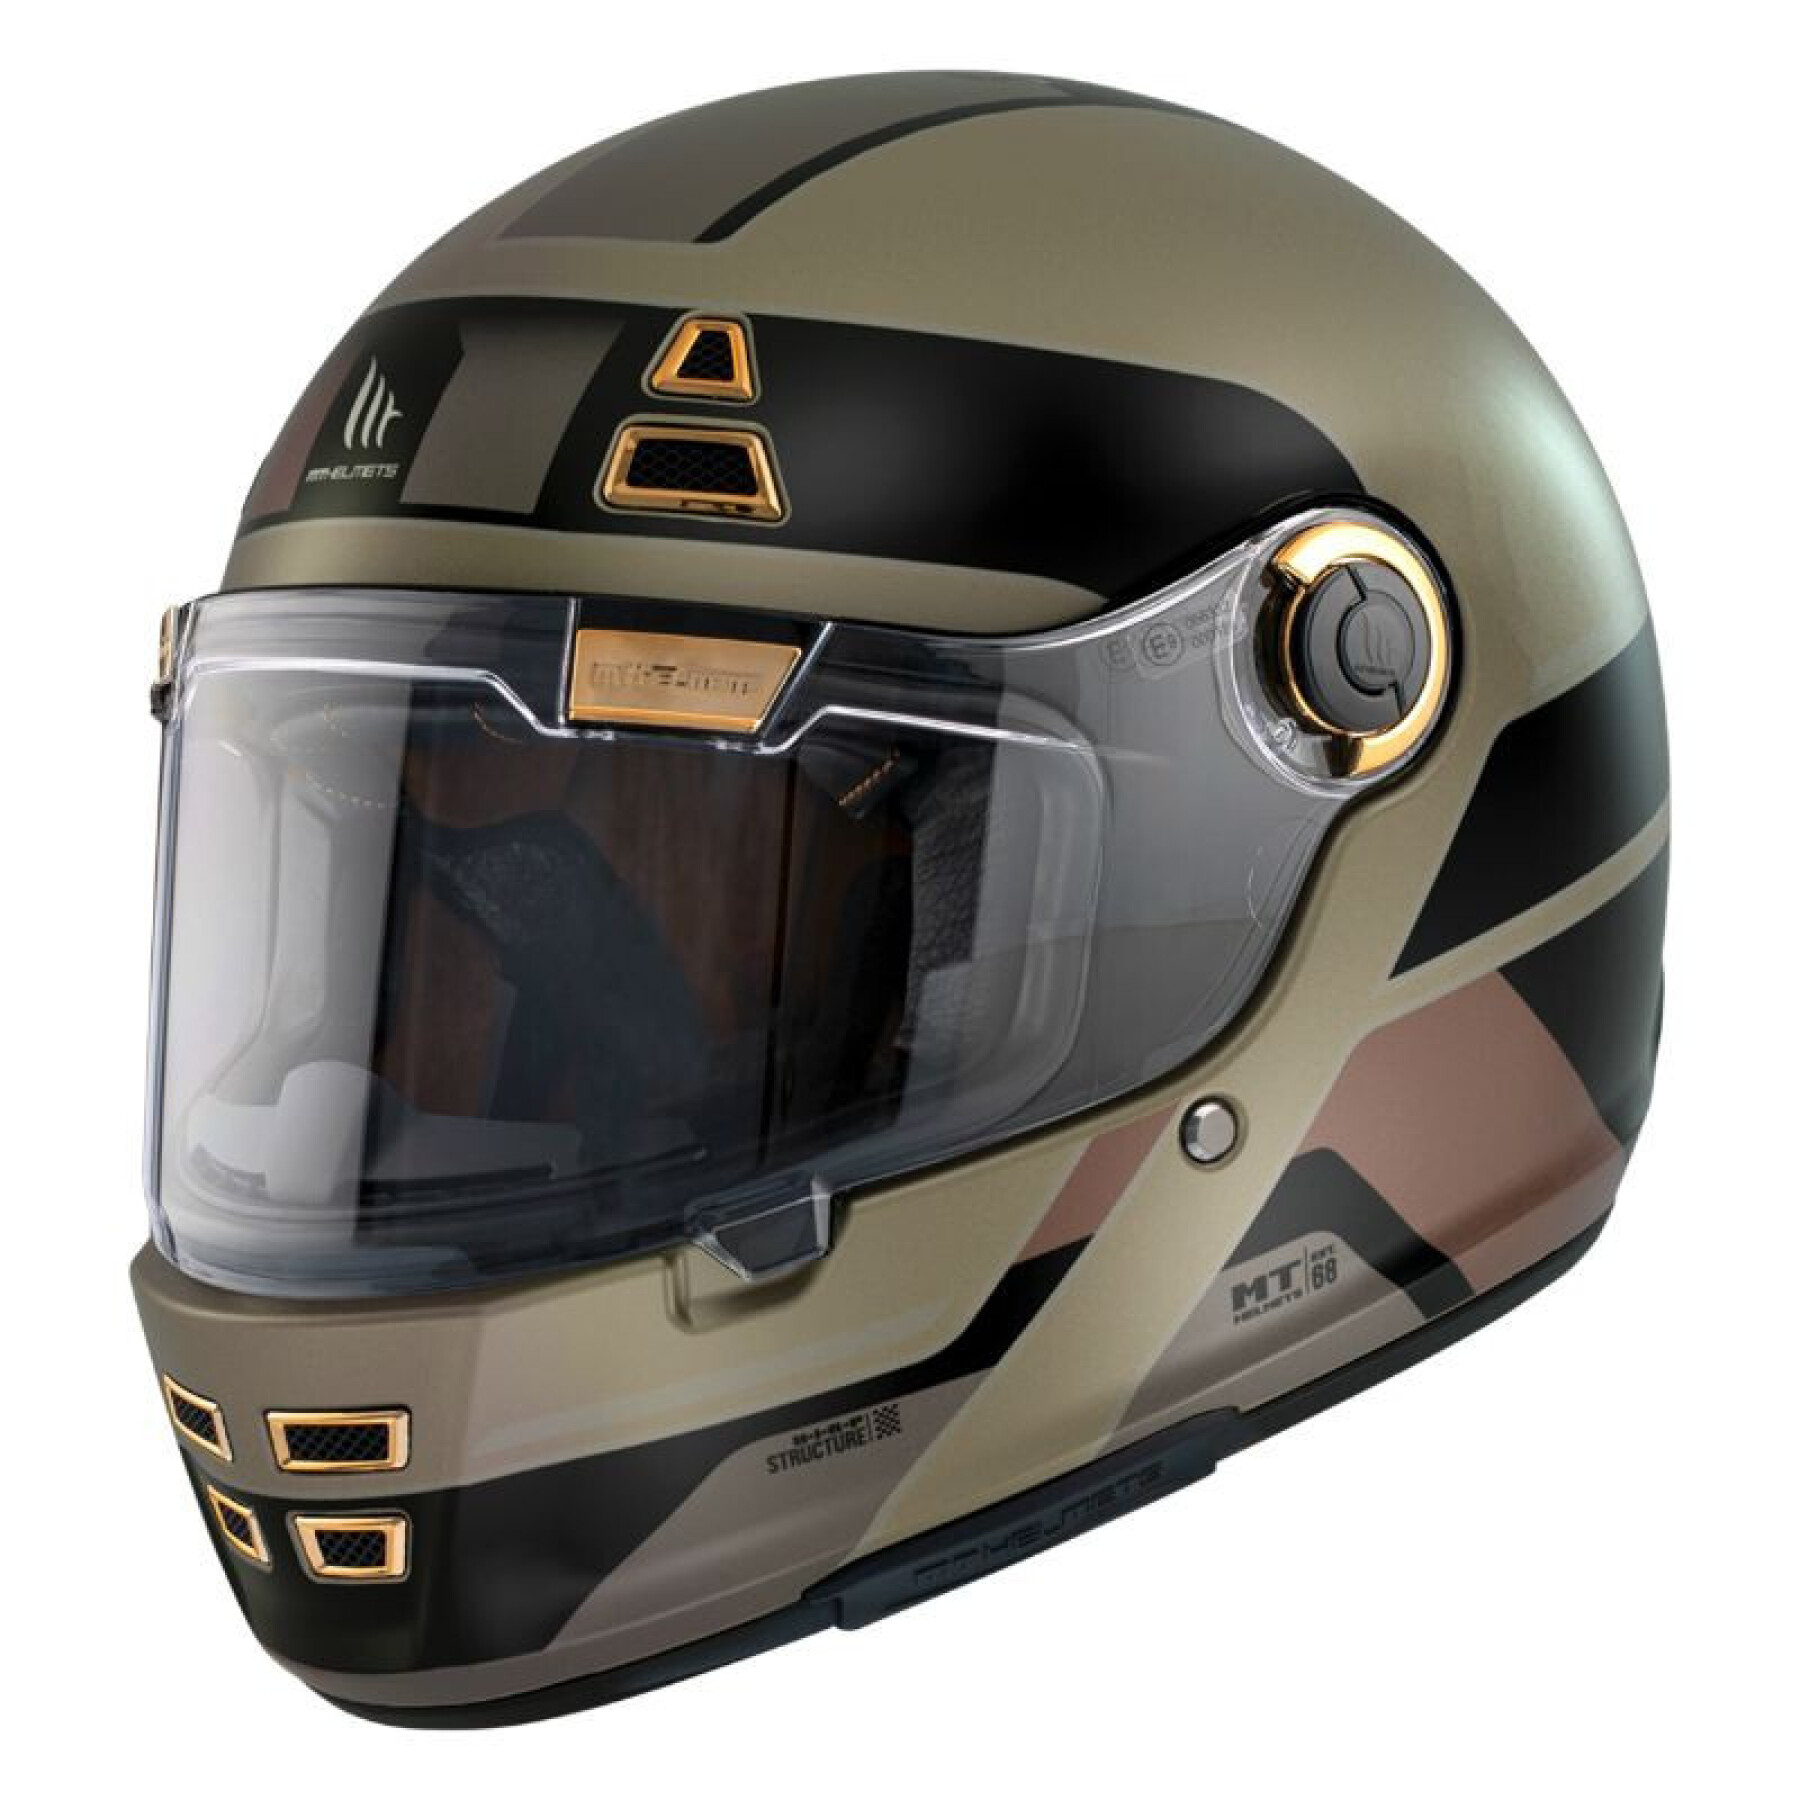 Casco integrale MT Helmets Jarama 68TH C9